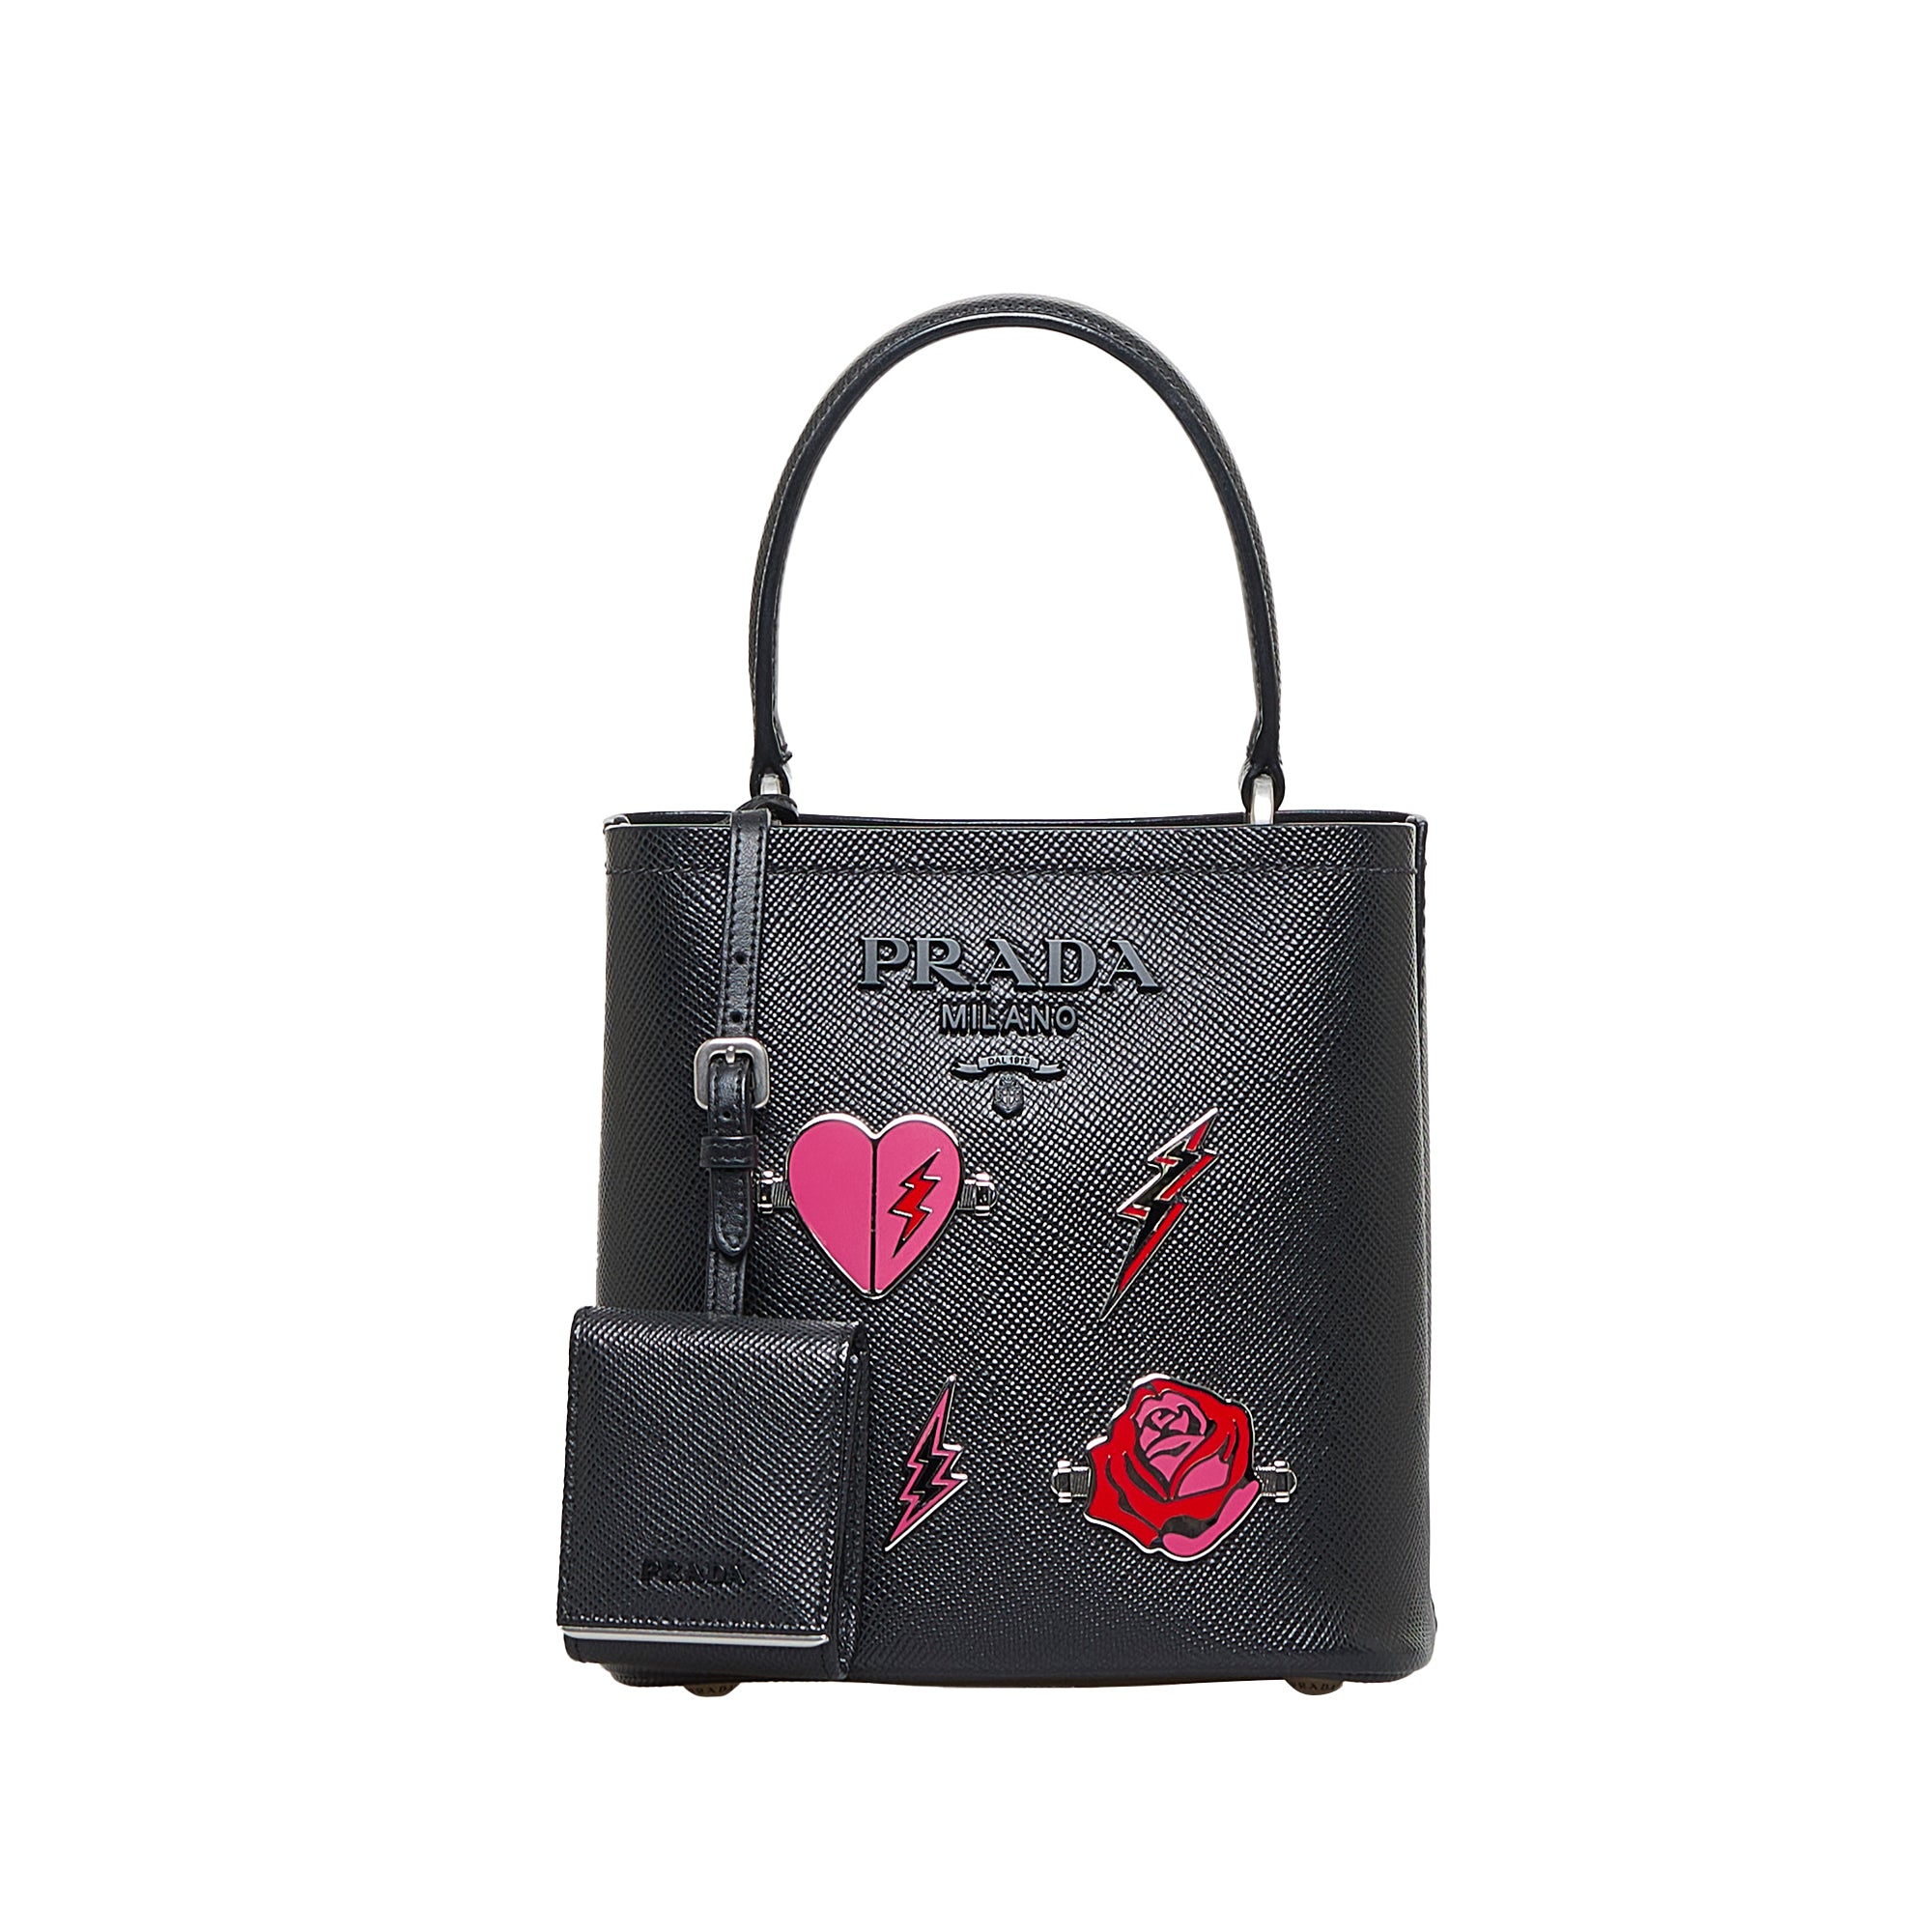 Prada Monochrome Chain Flap Bag Embellished Saffiano Leather Small